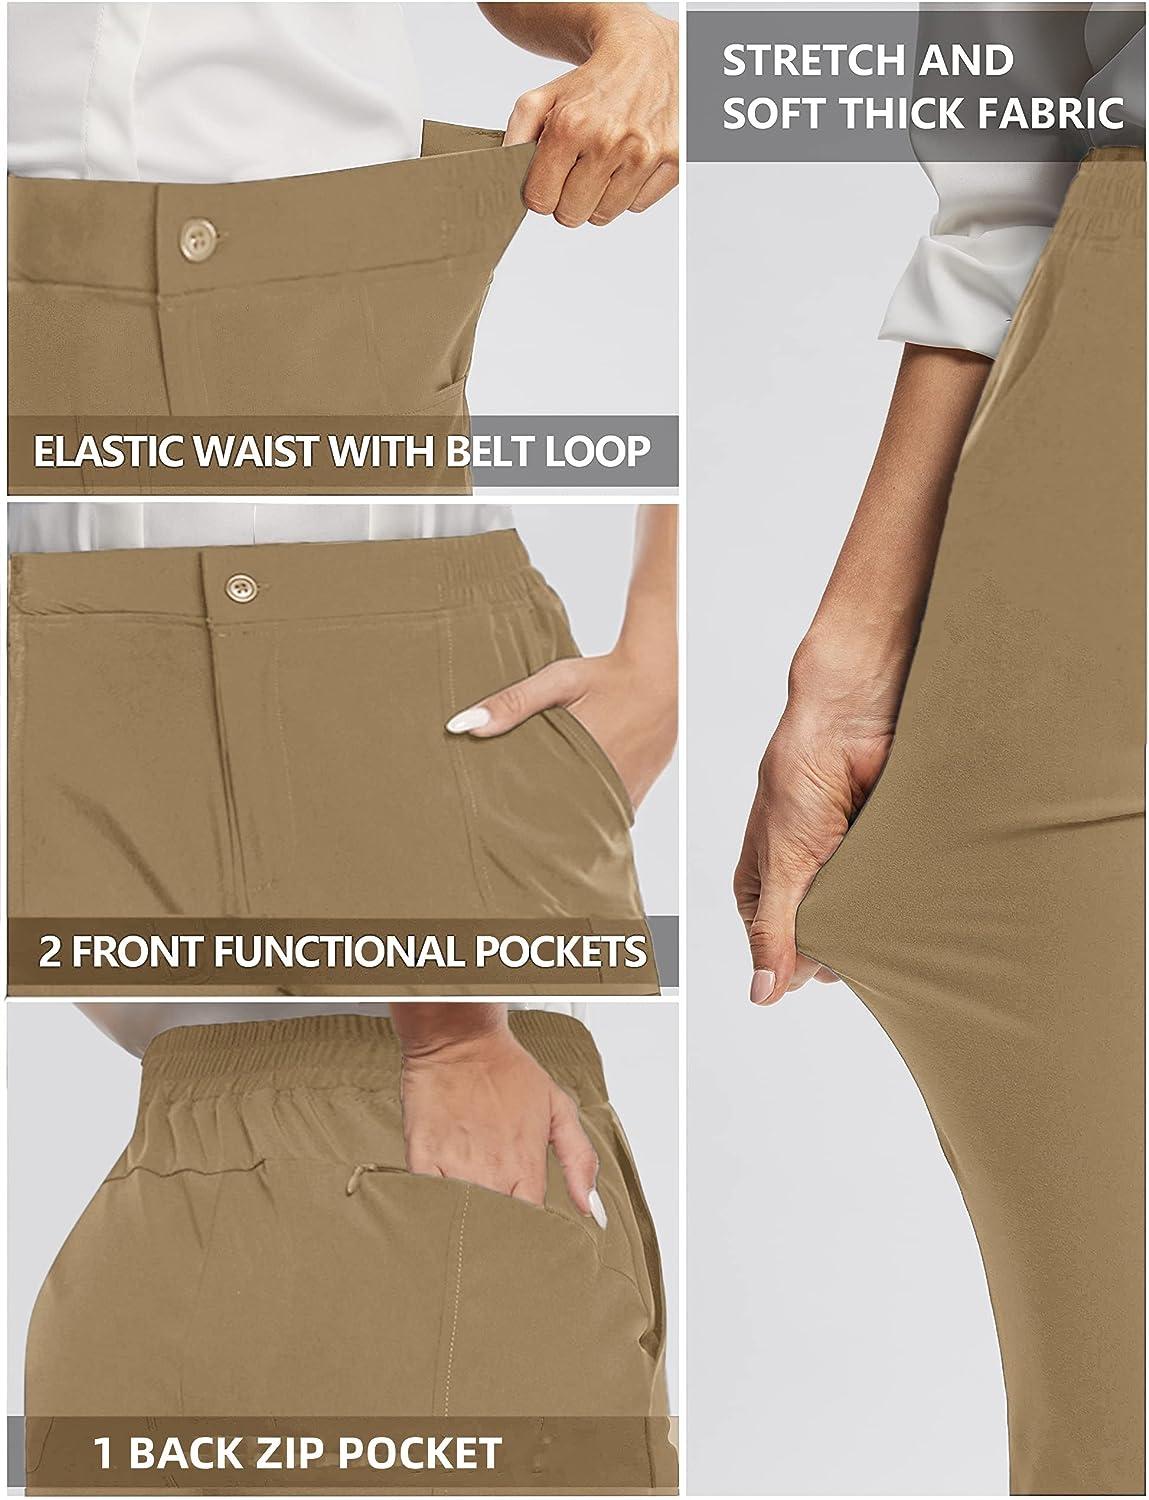 NICEWIN Women's Yoga Dress Pants with 4 Pockets, Petite Regular